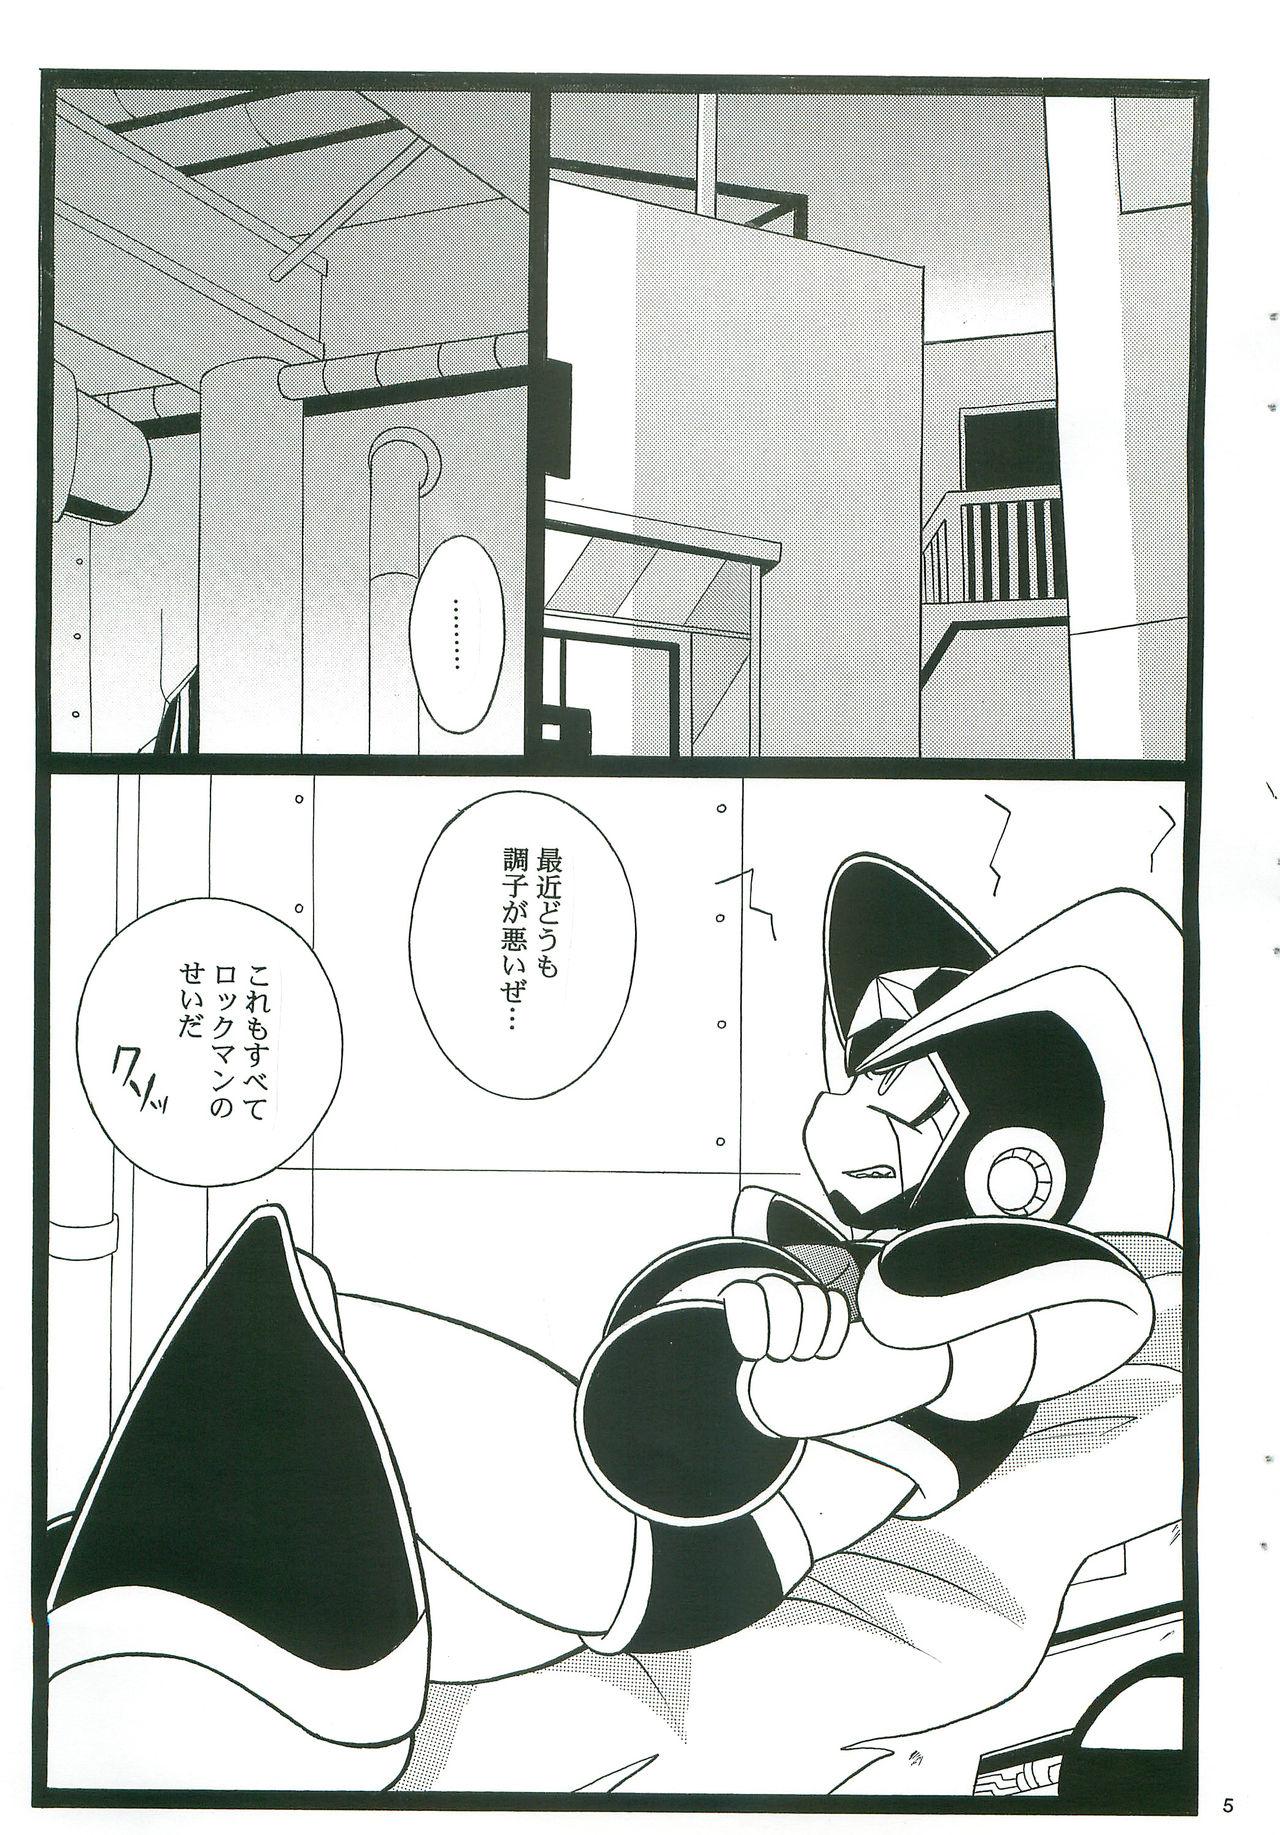 Gaping SLAP BASS next stage! - Megaman X - Page 4